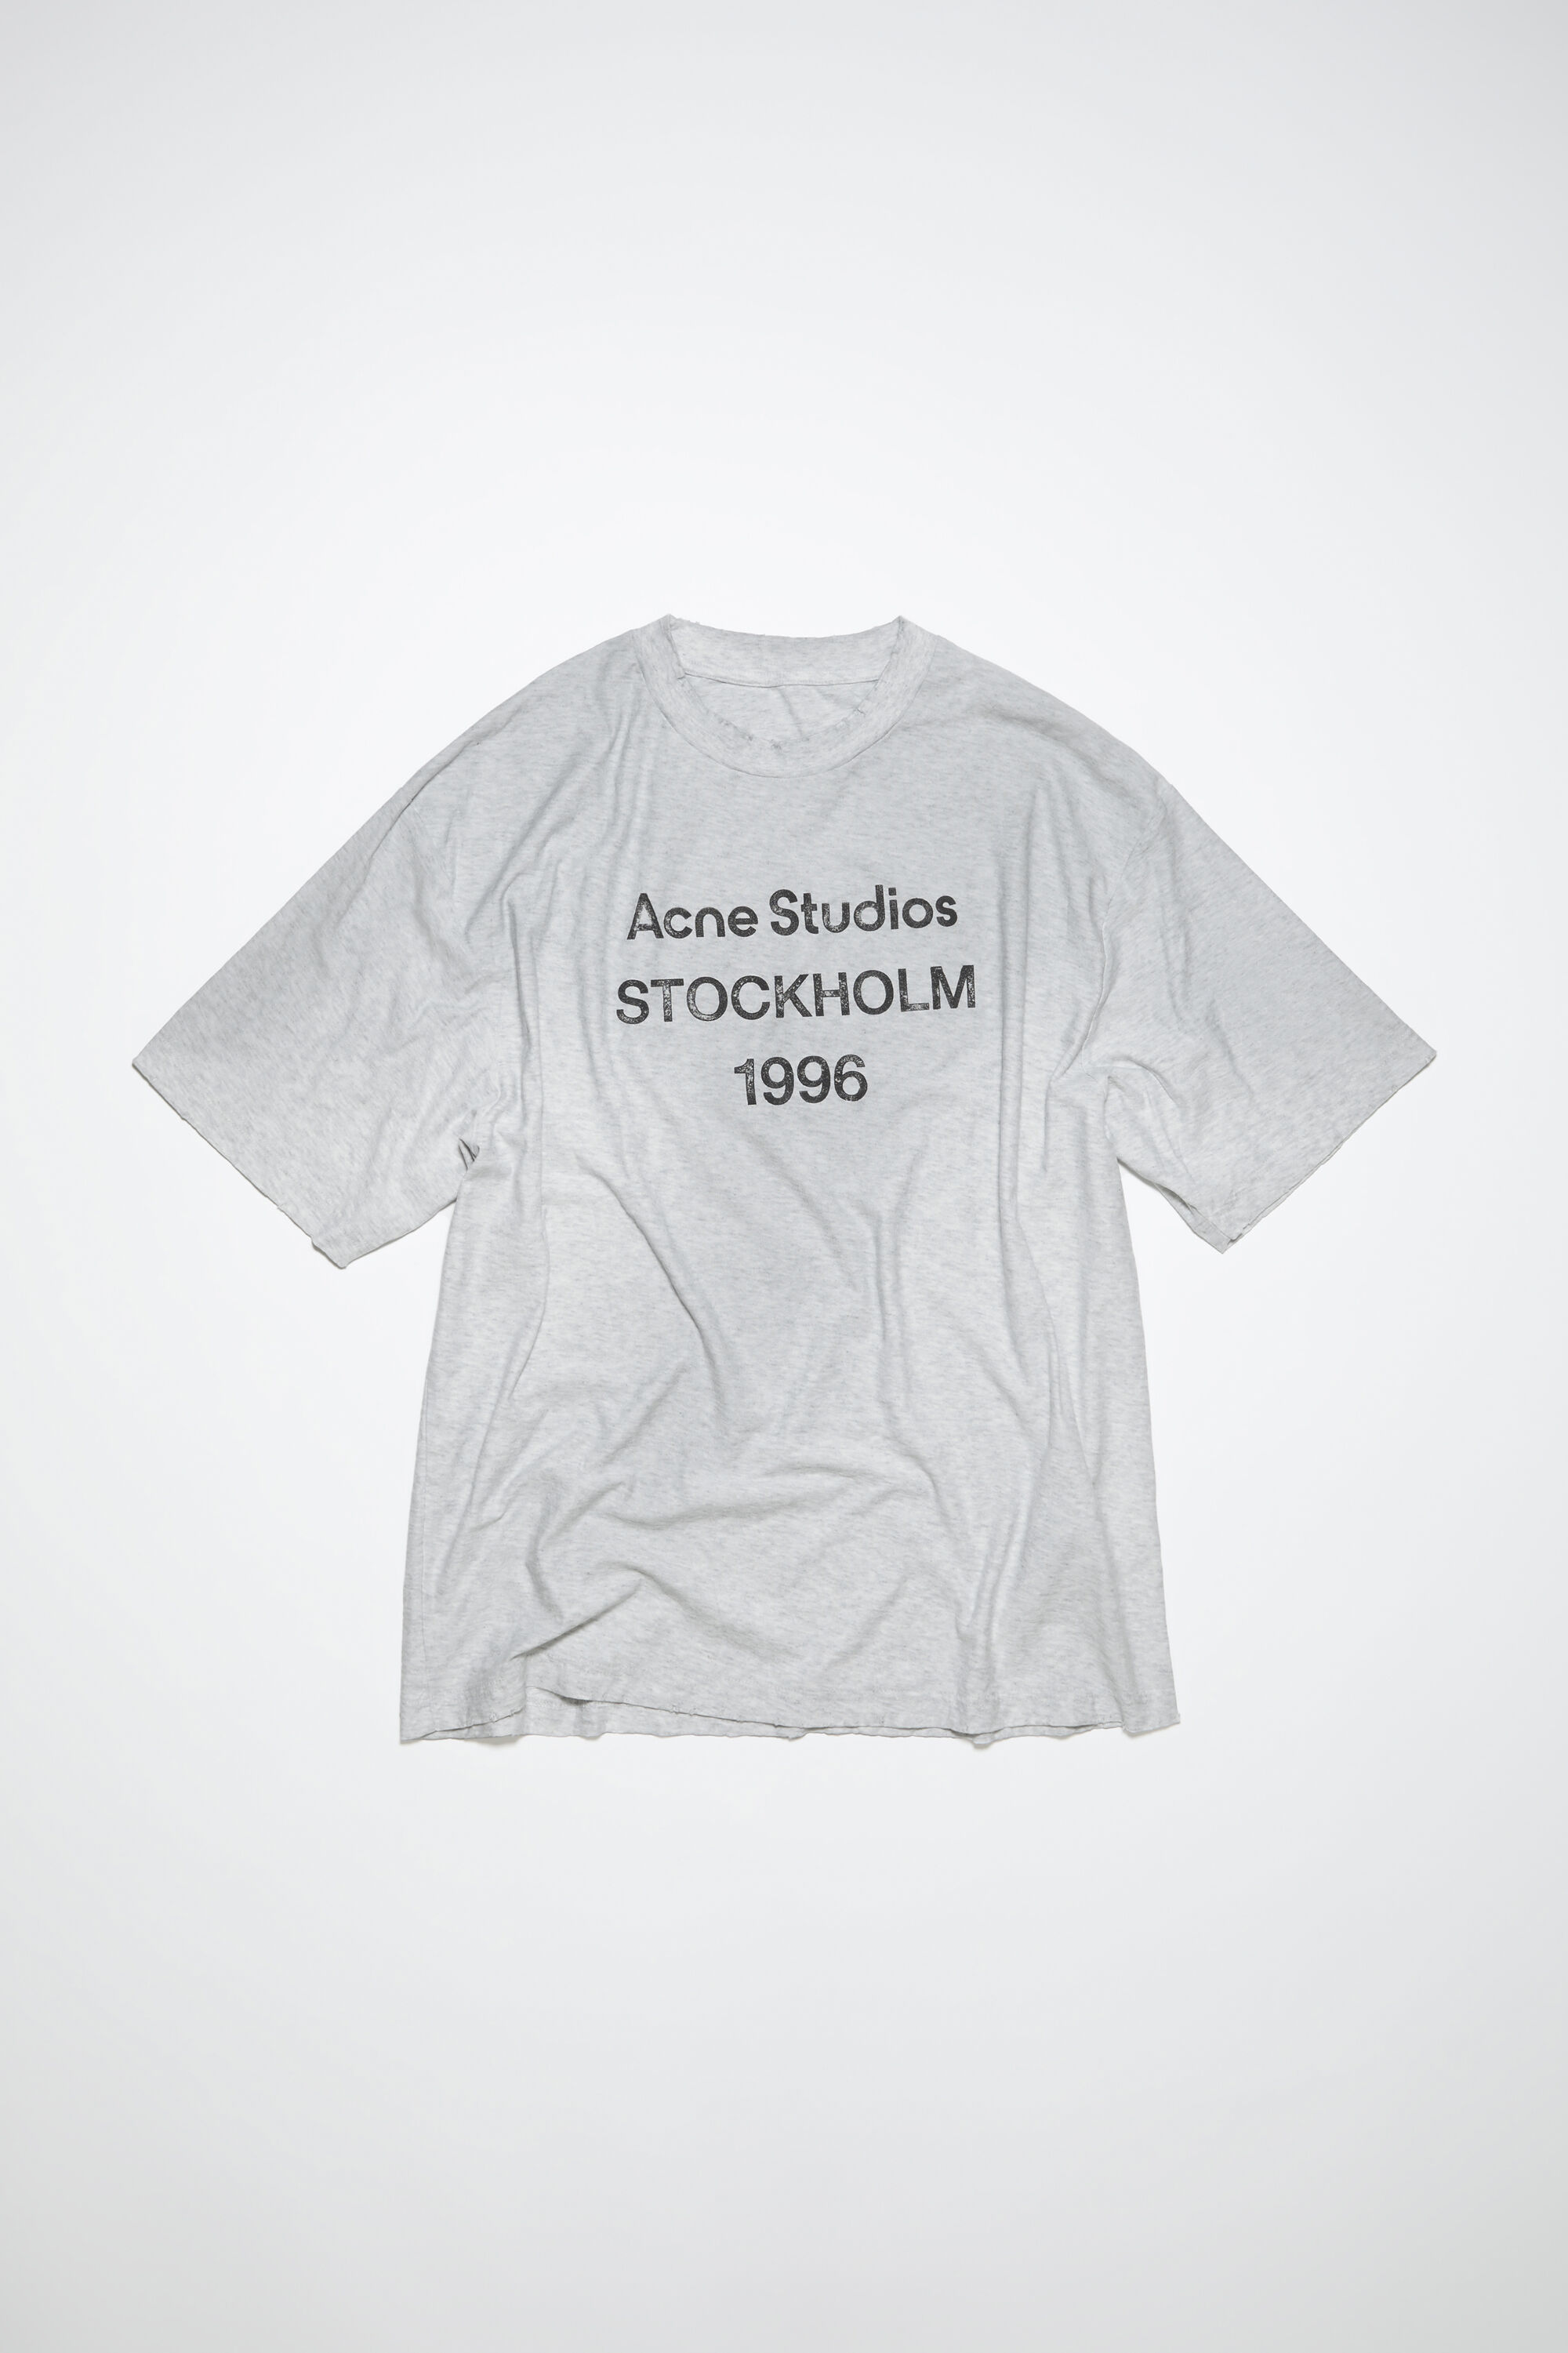 Acne Studios ロゴTシャツ メランジTシャツ S-